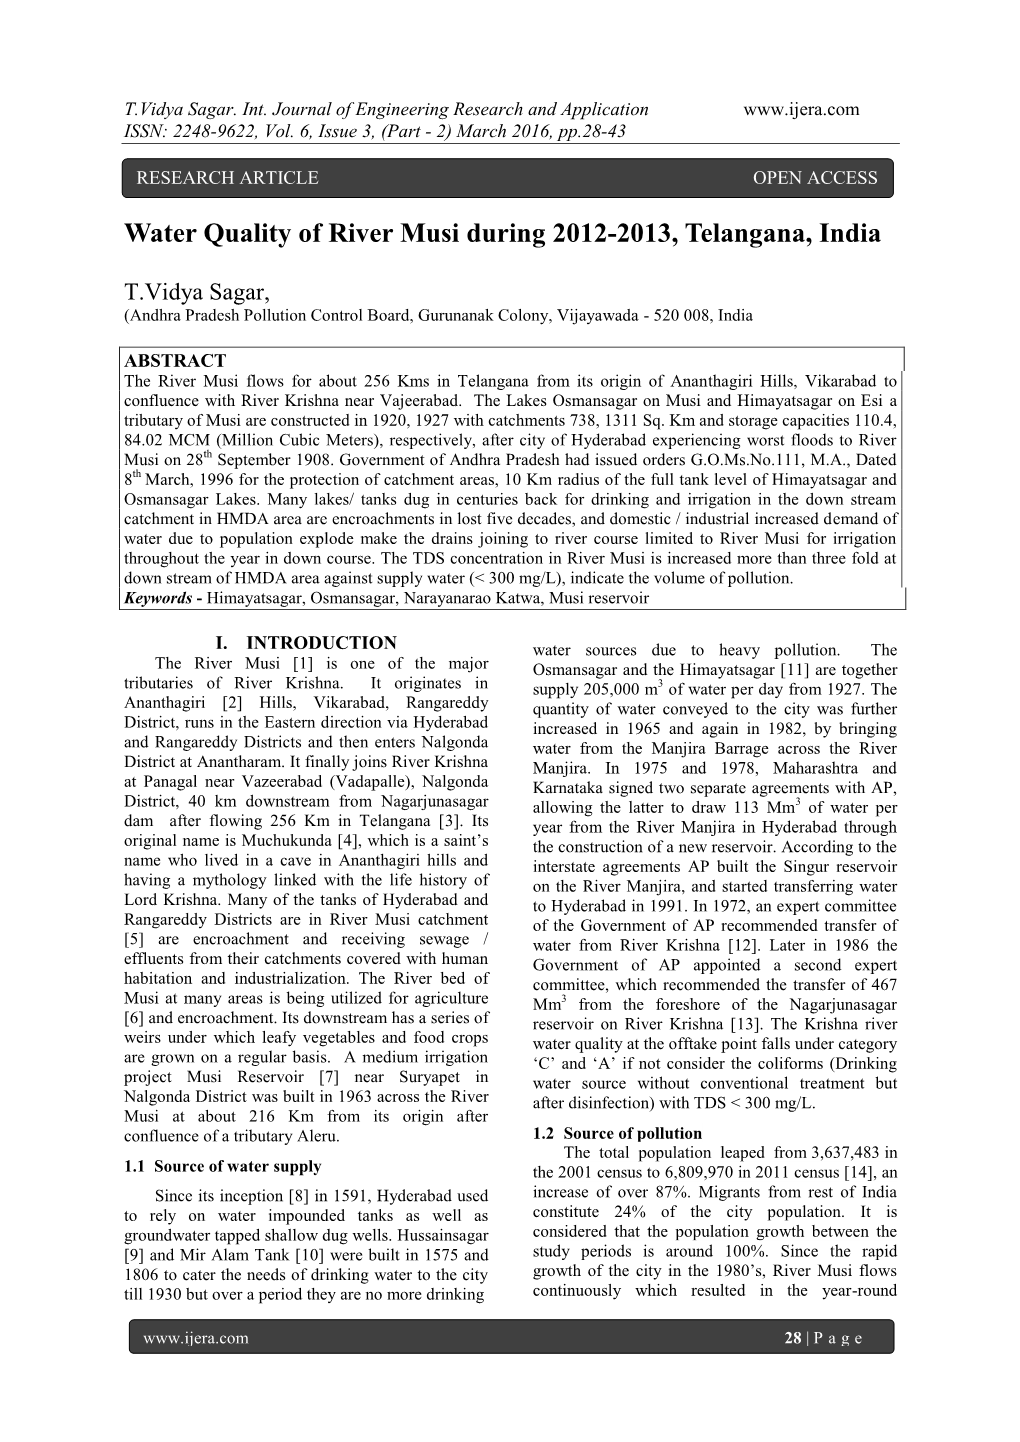 Water Quality of River Musi During 2012-2013, Telangana, India